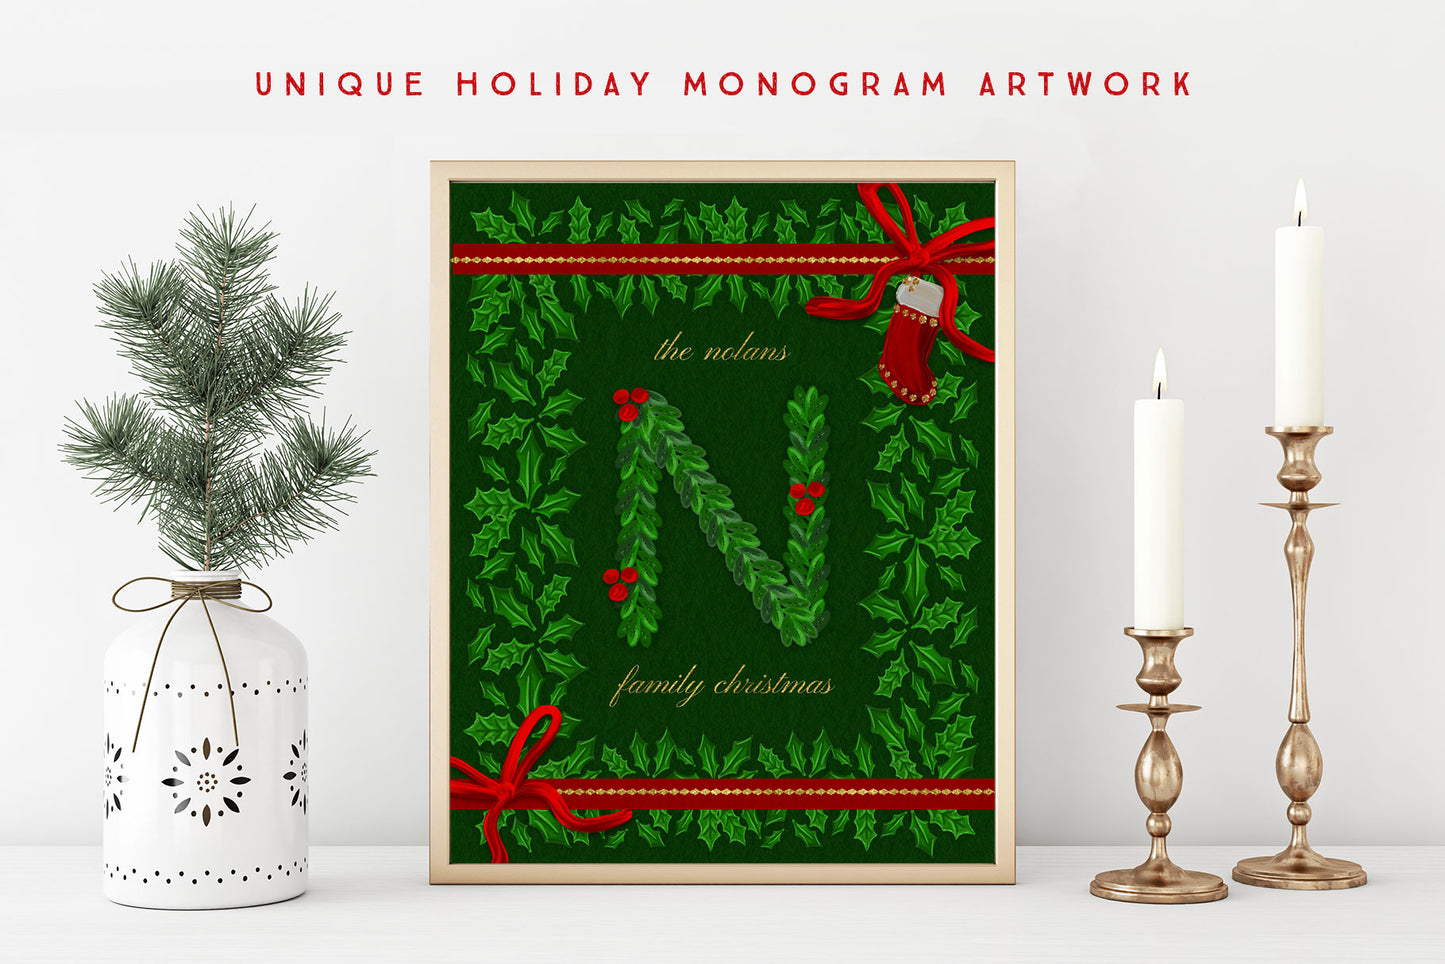 Luxe Christmas & Holiday Greenery Alphabets: create christmas monogram artwork